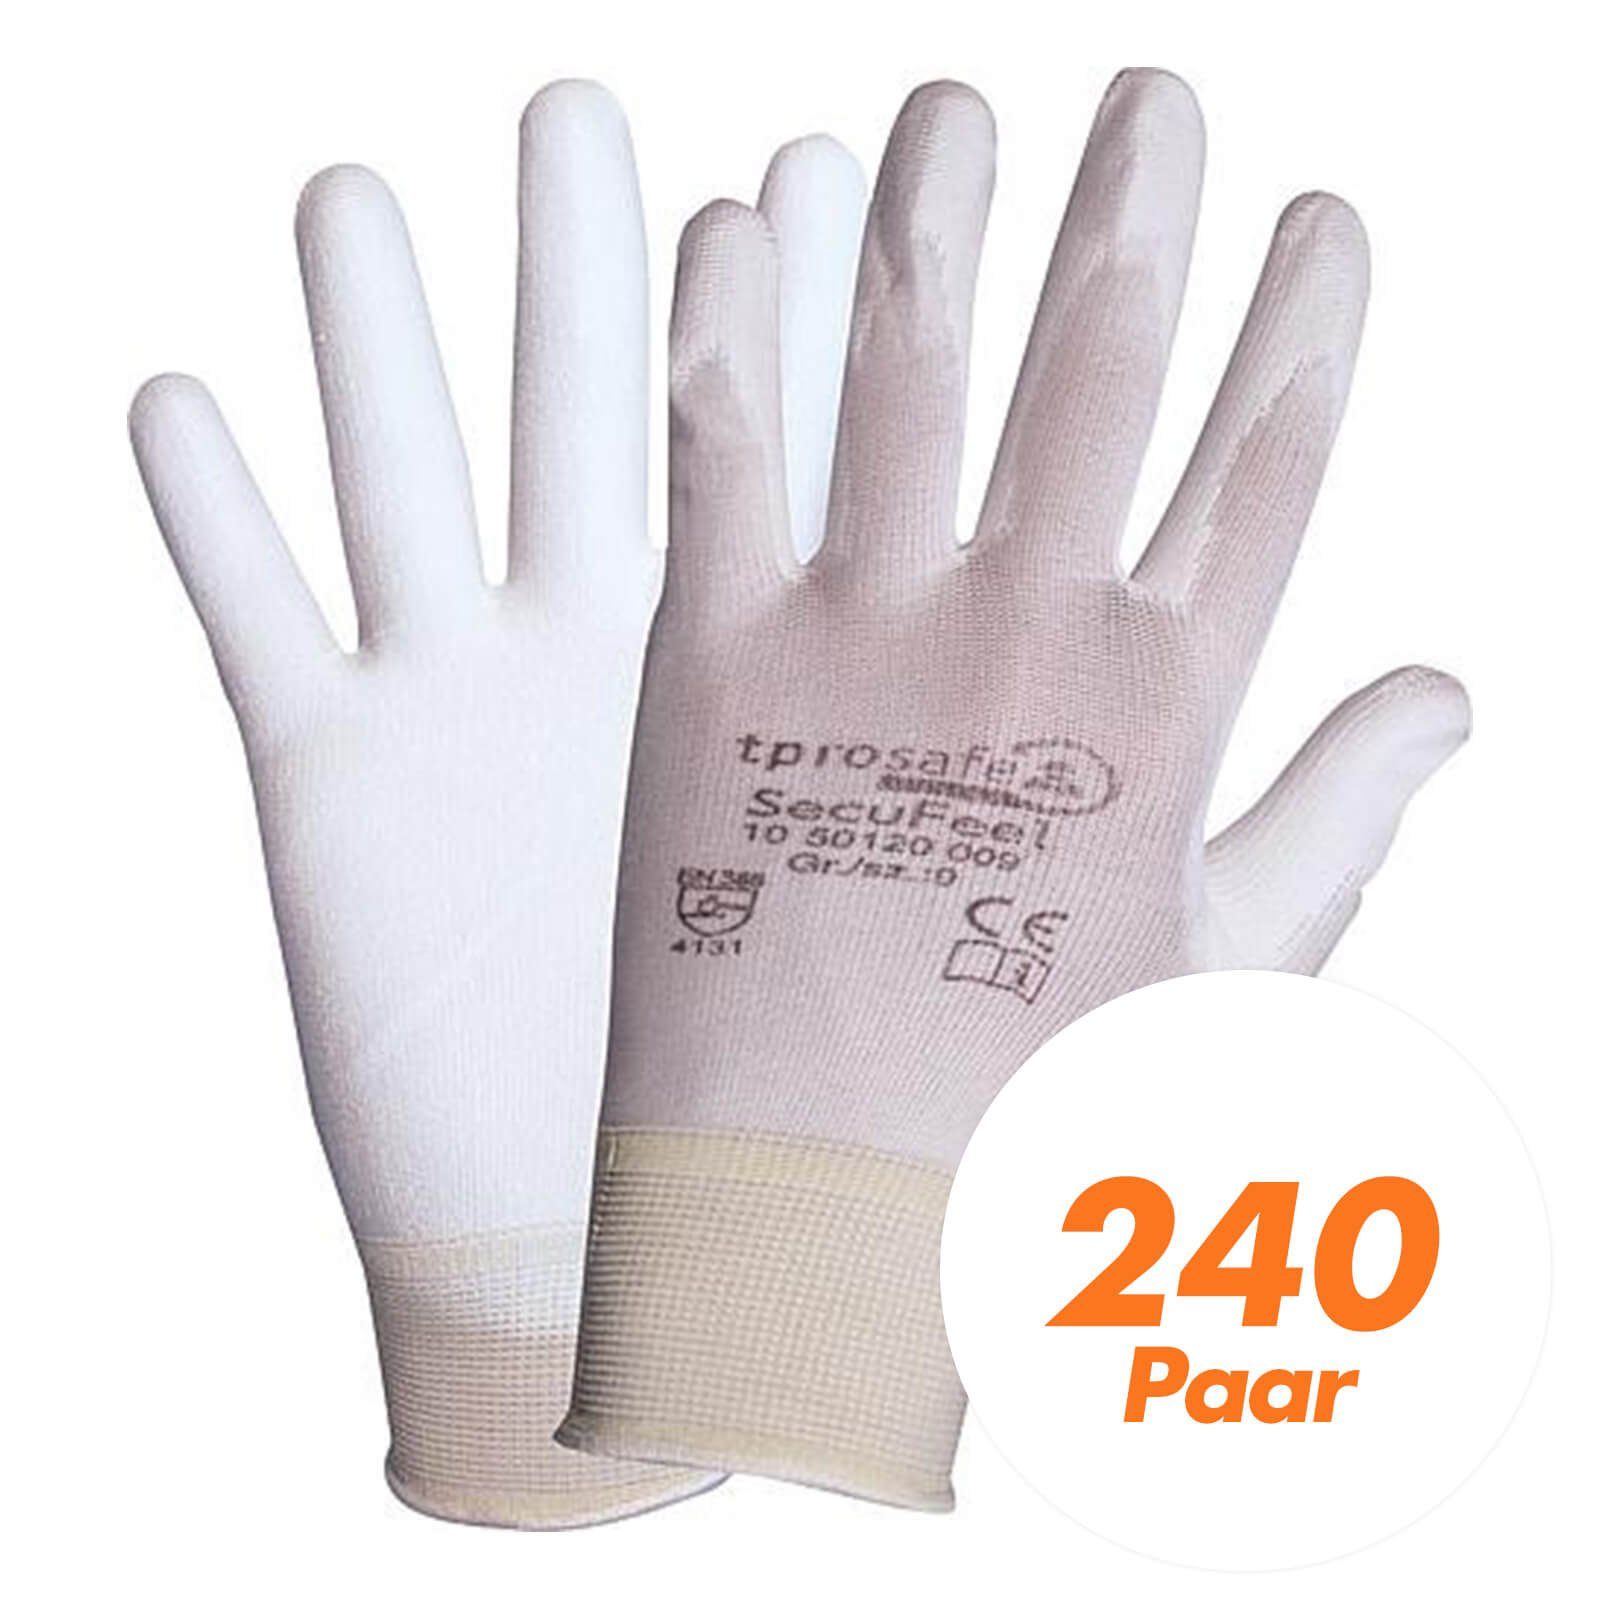 SecuFeel Nitril-Handschuhe (Spar-Set) white - PU-Arbeitsschutzhandschuhe, tprosafe Handschuhe 240x tprosafe